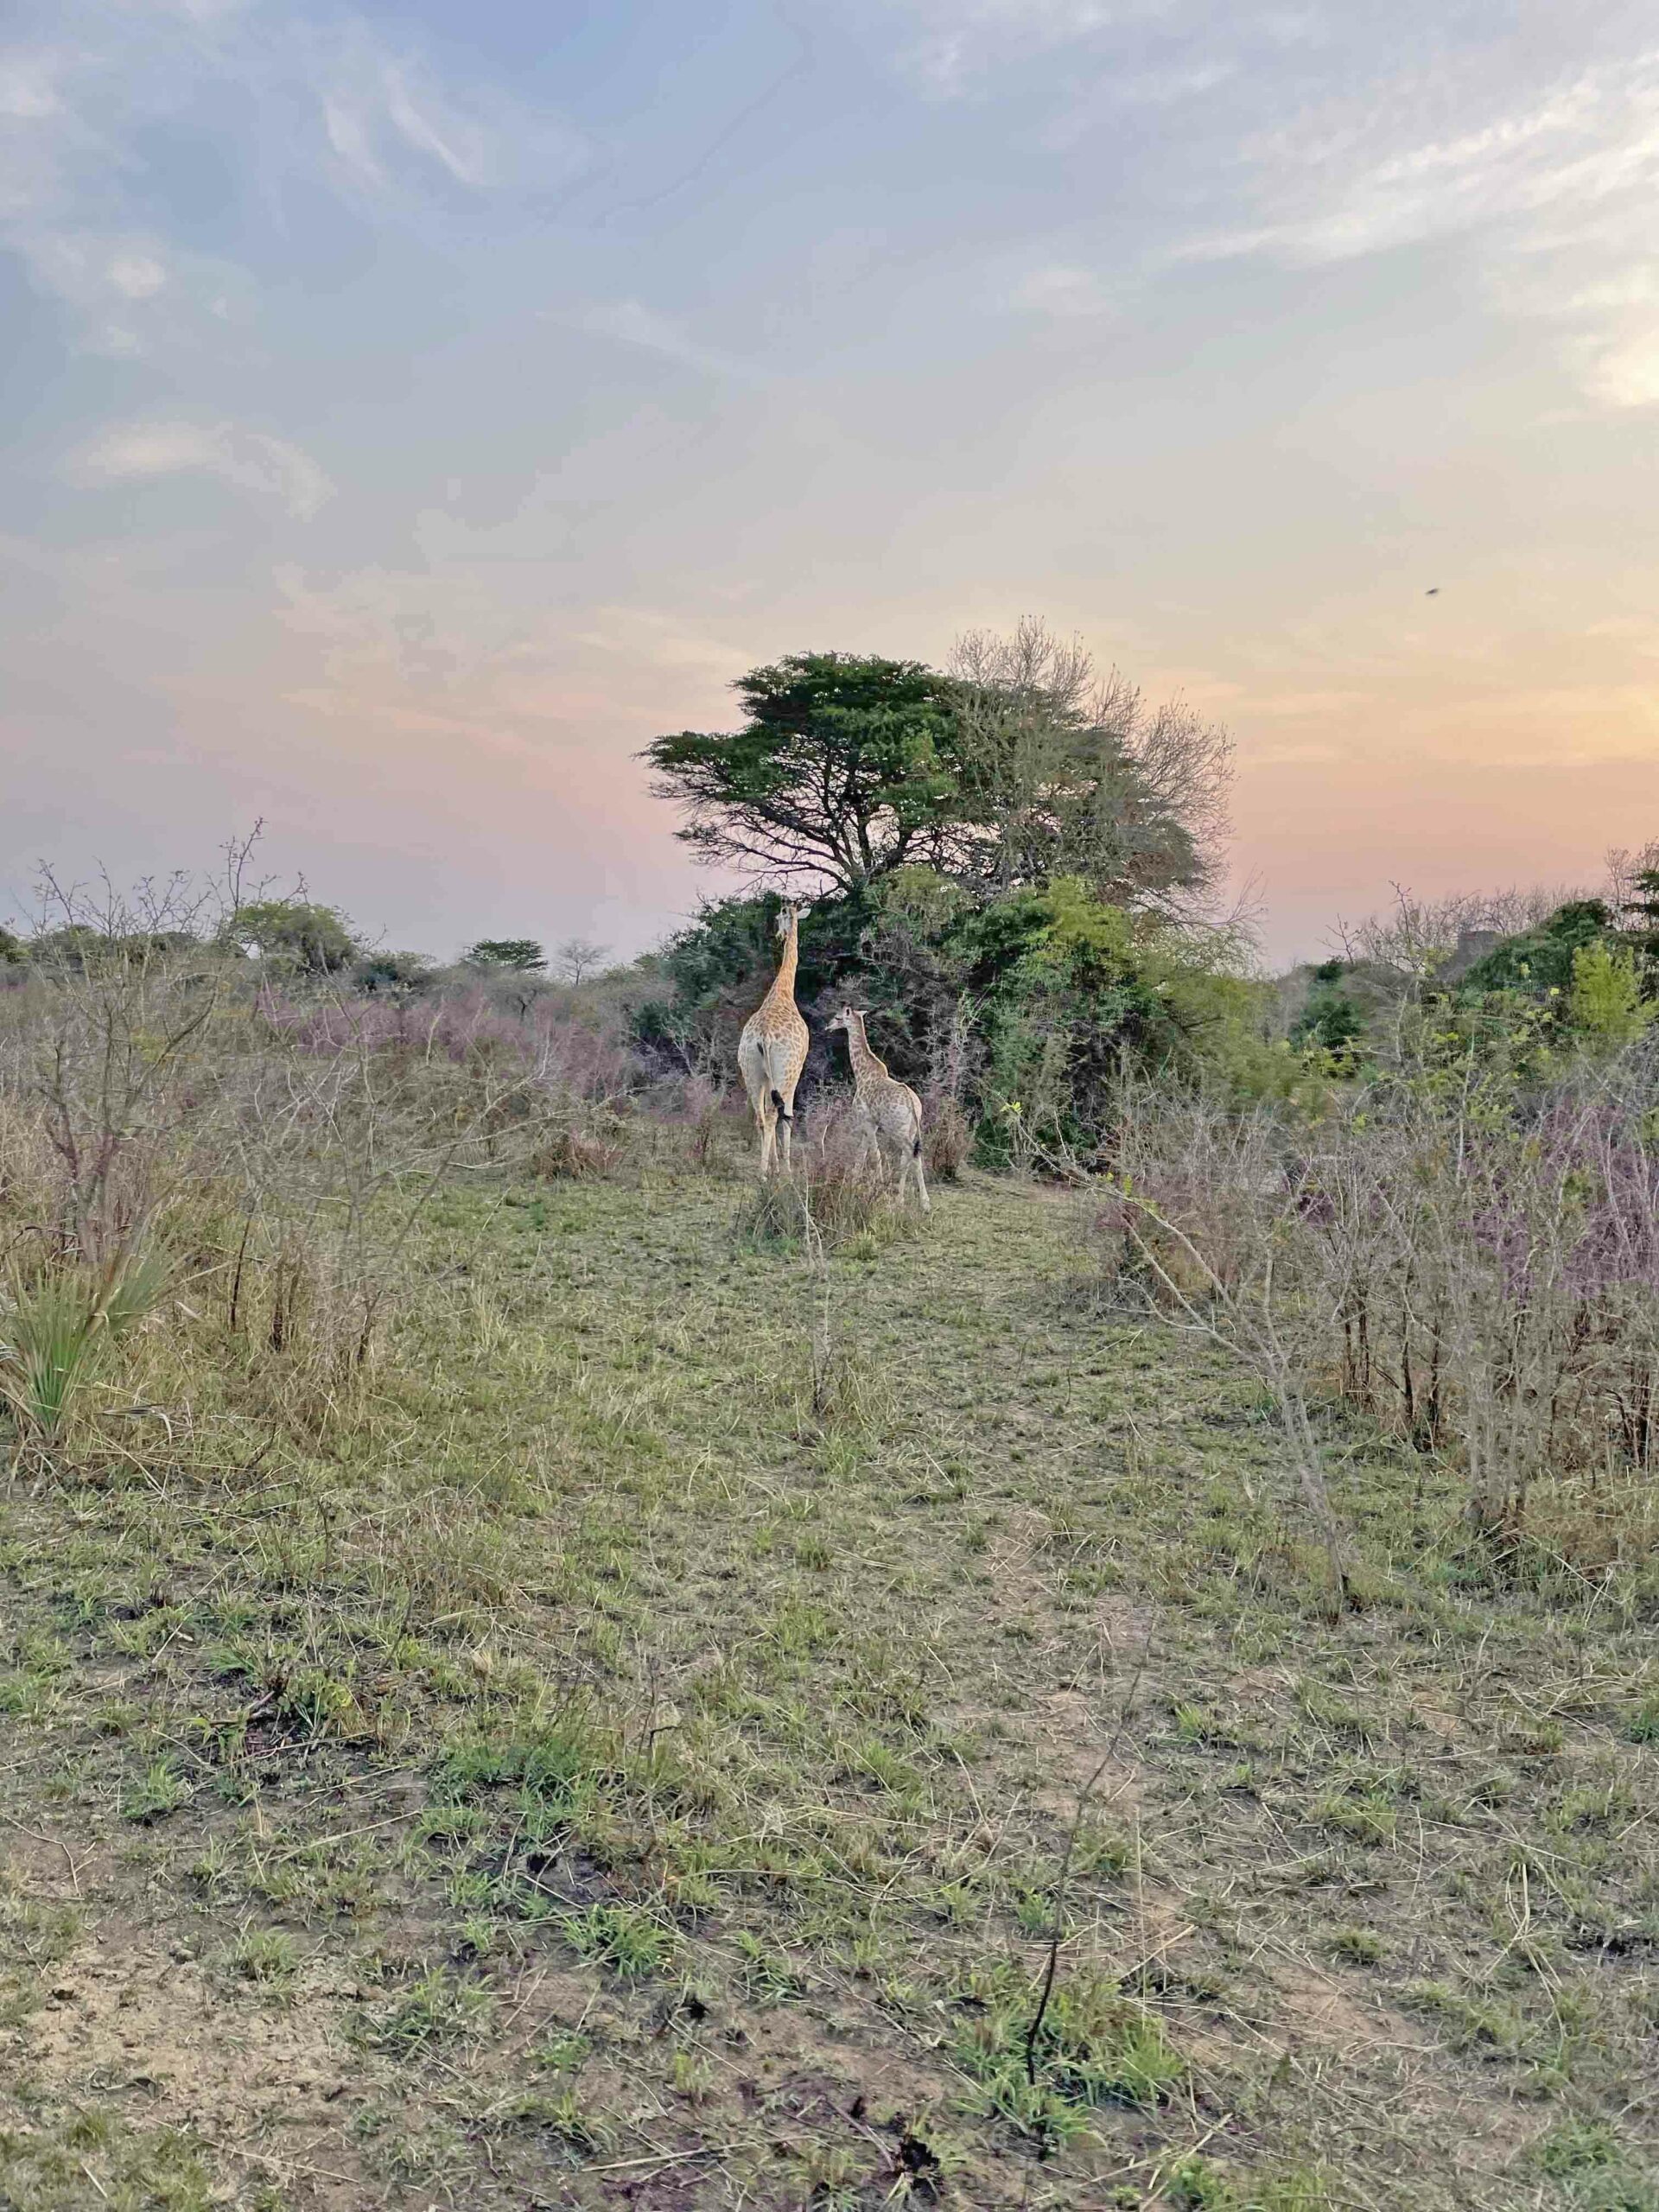 safari com criancas - andbeyond phinda girafas - africa do sul